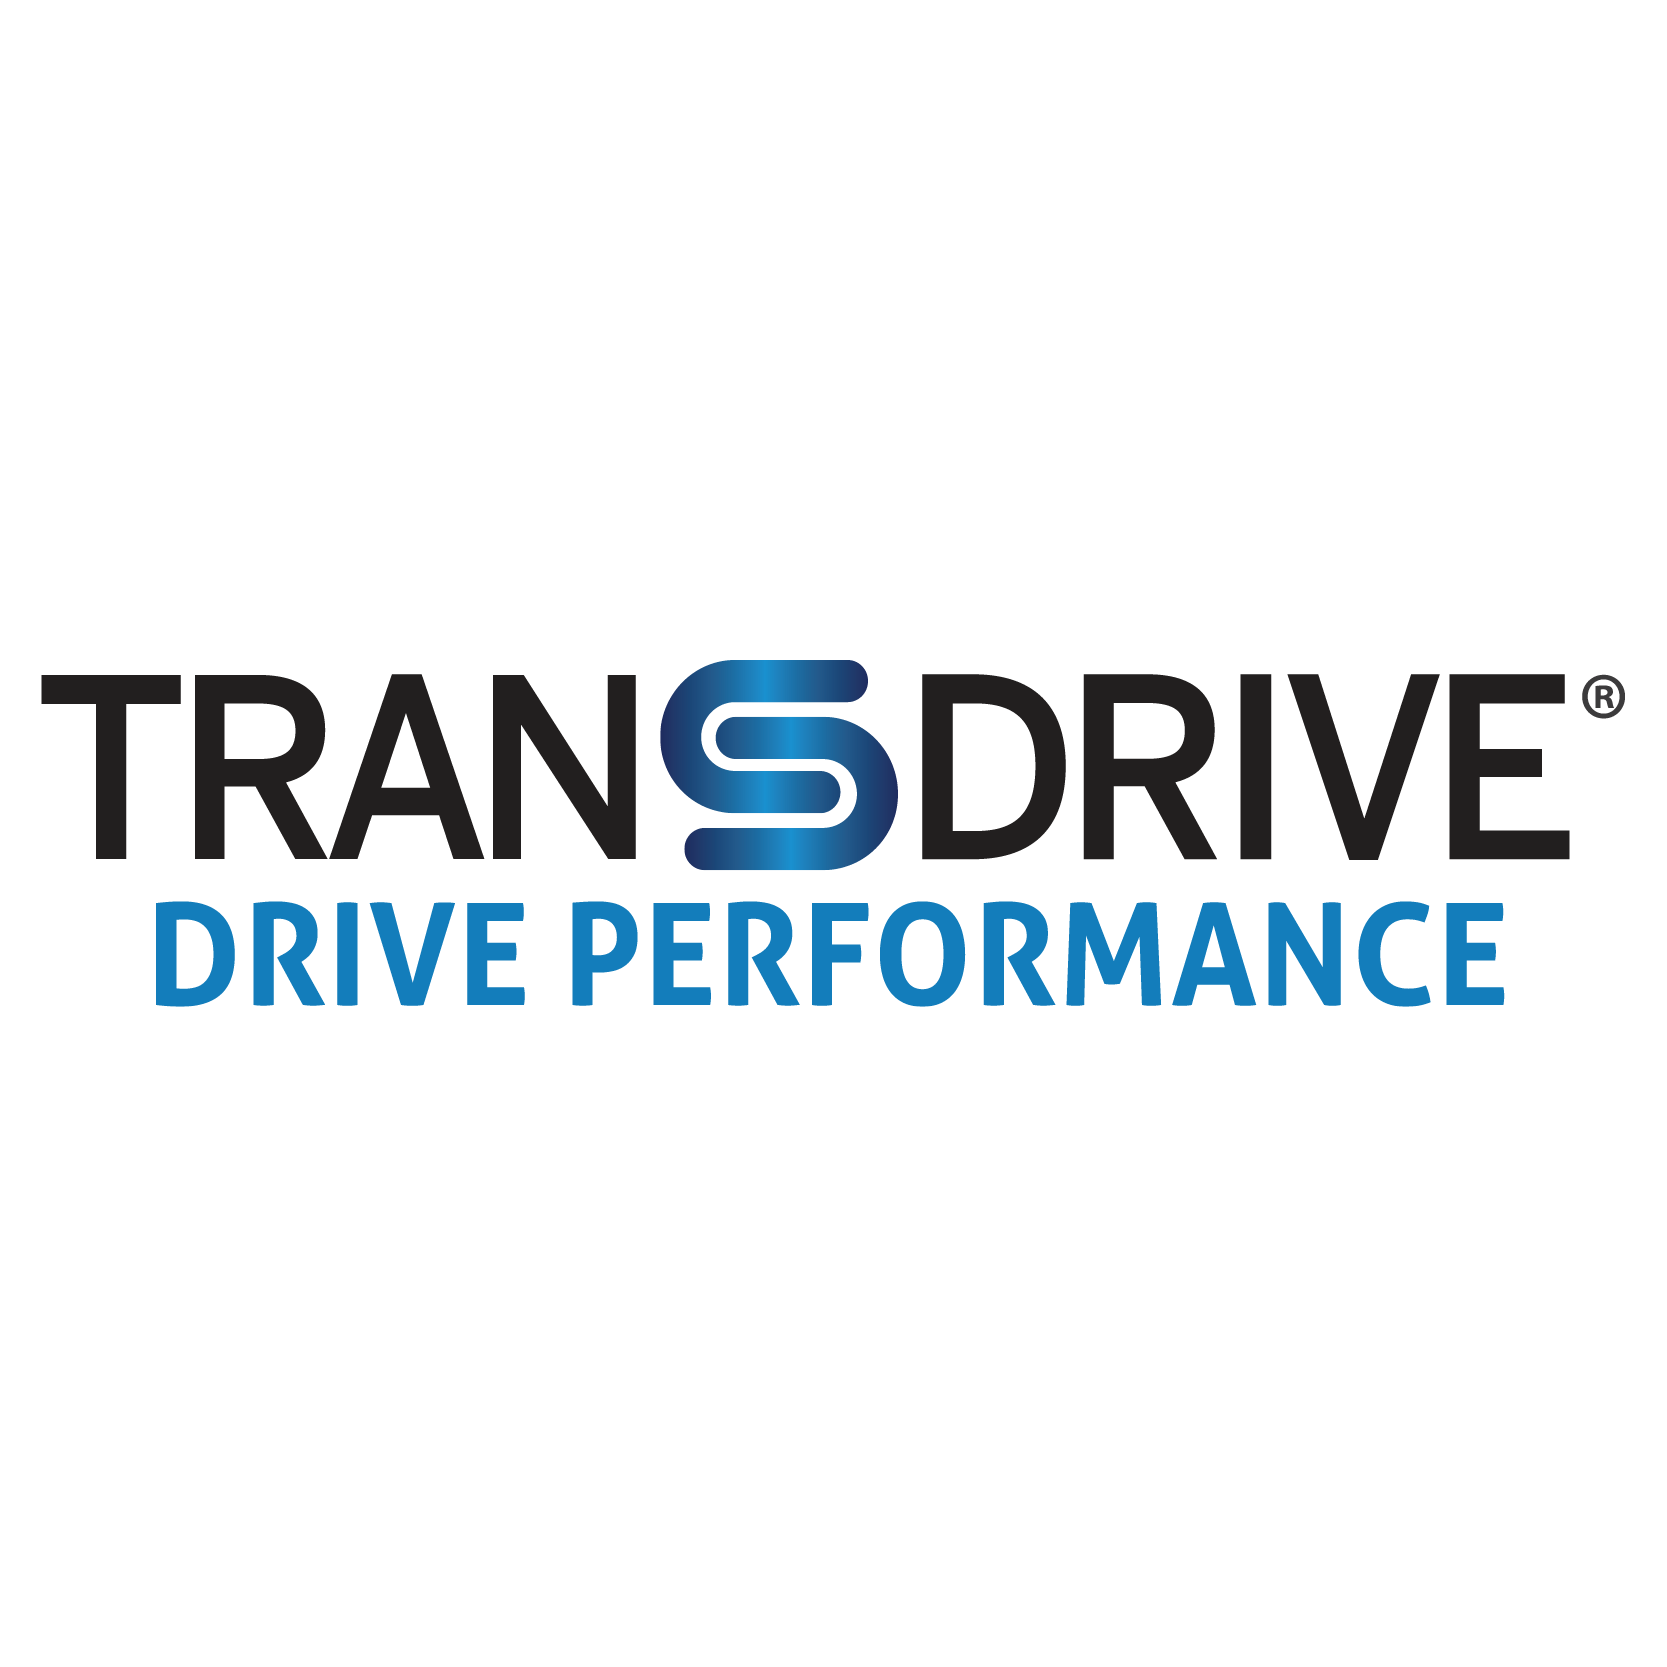 TransDrive TD logo